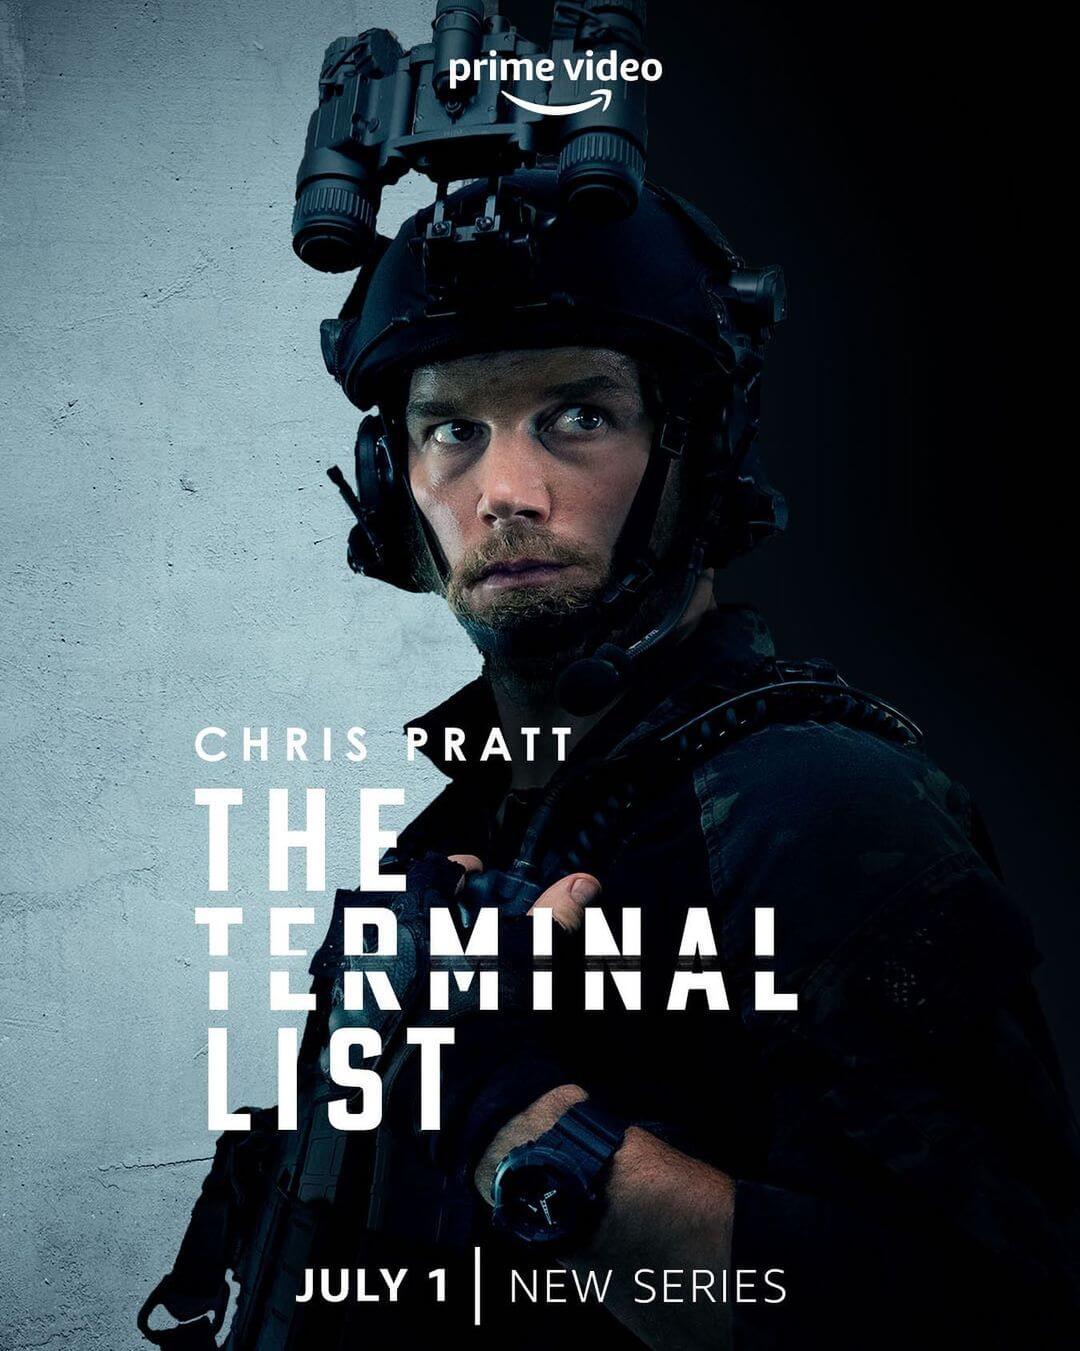 Chris Pratt in Action on The Terminal List Set